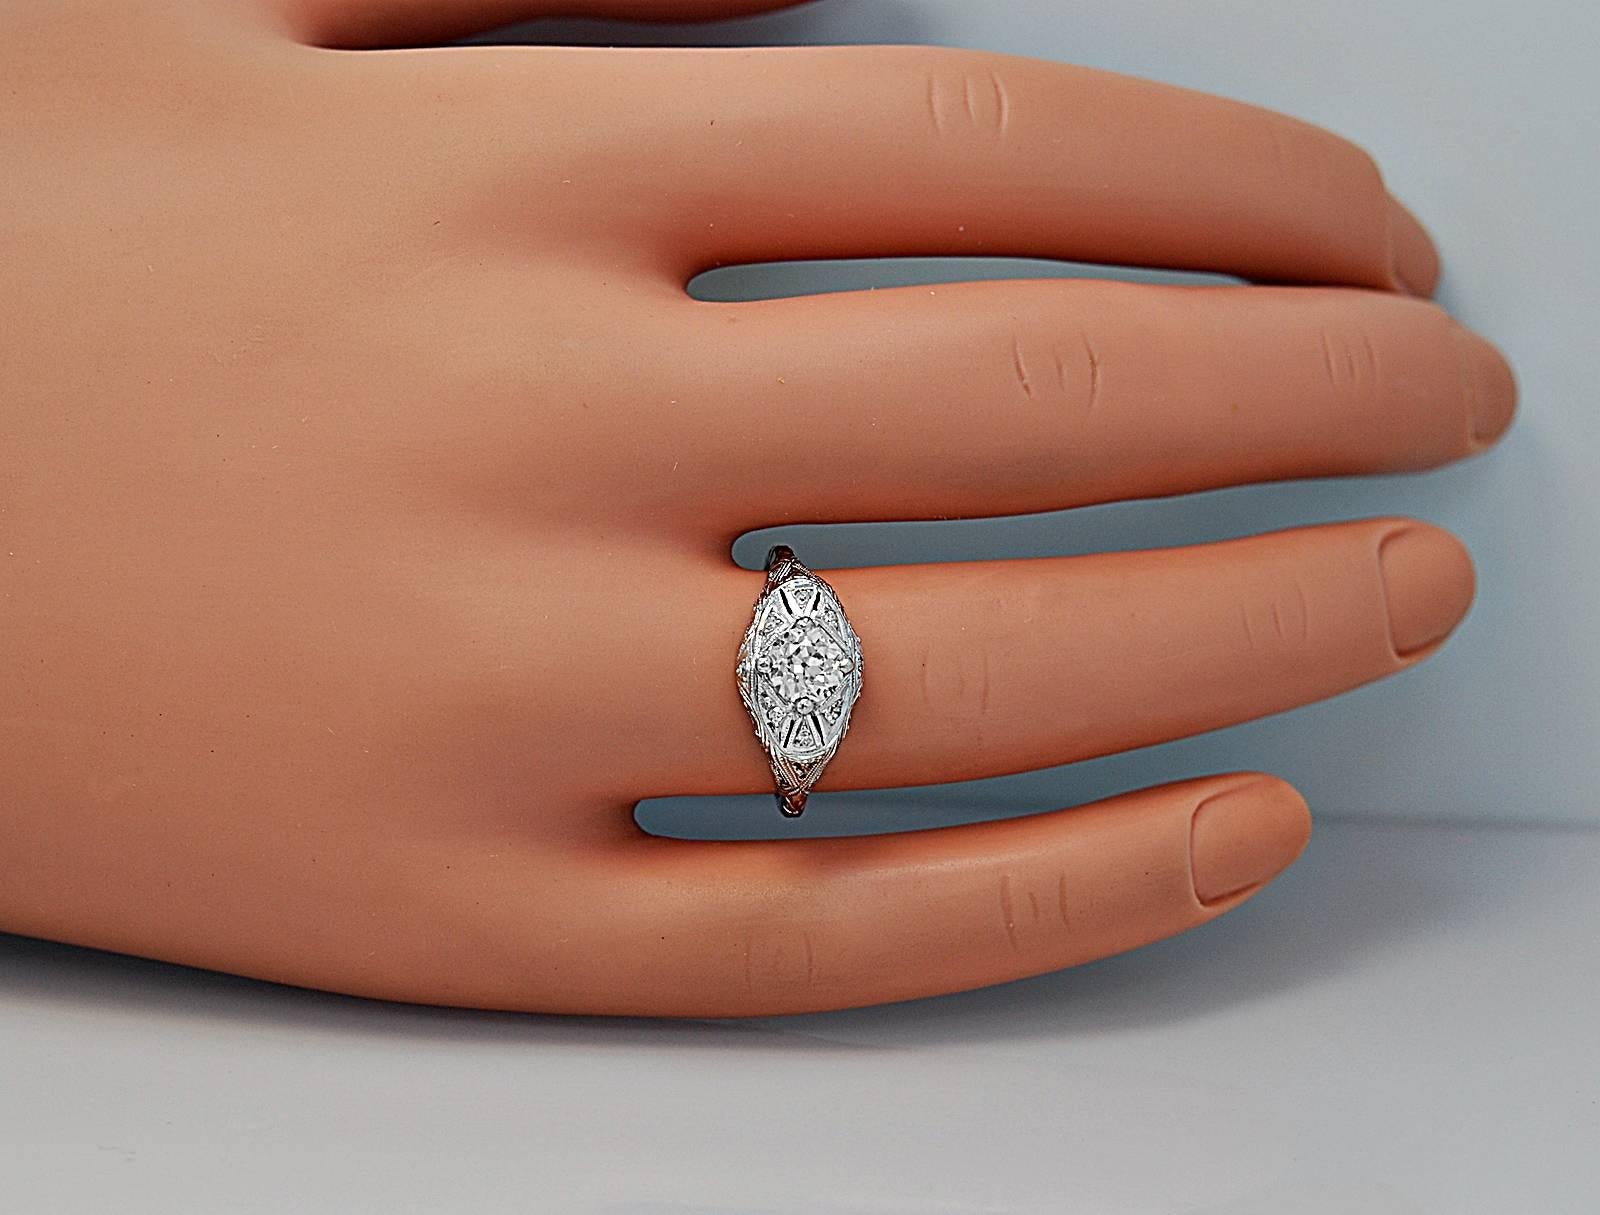 65 carat diamond ring